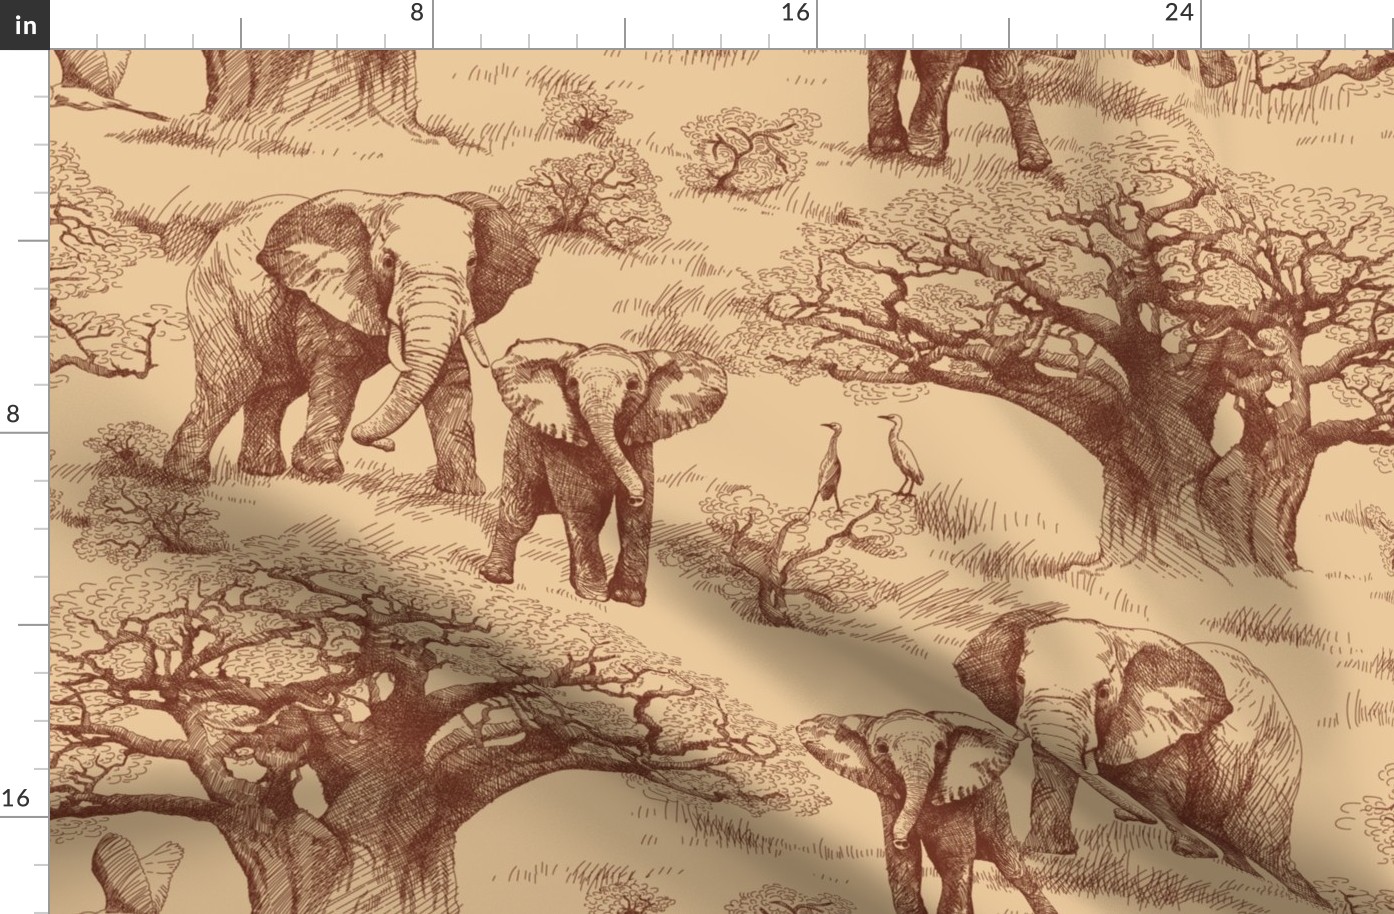 Elephants and Baobab Toile - Sienna